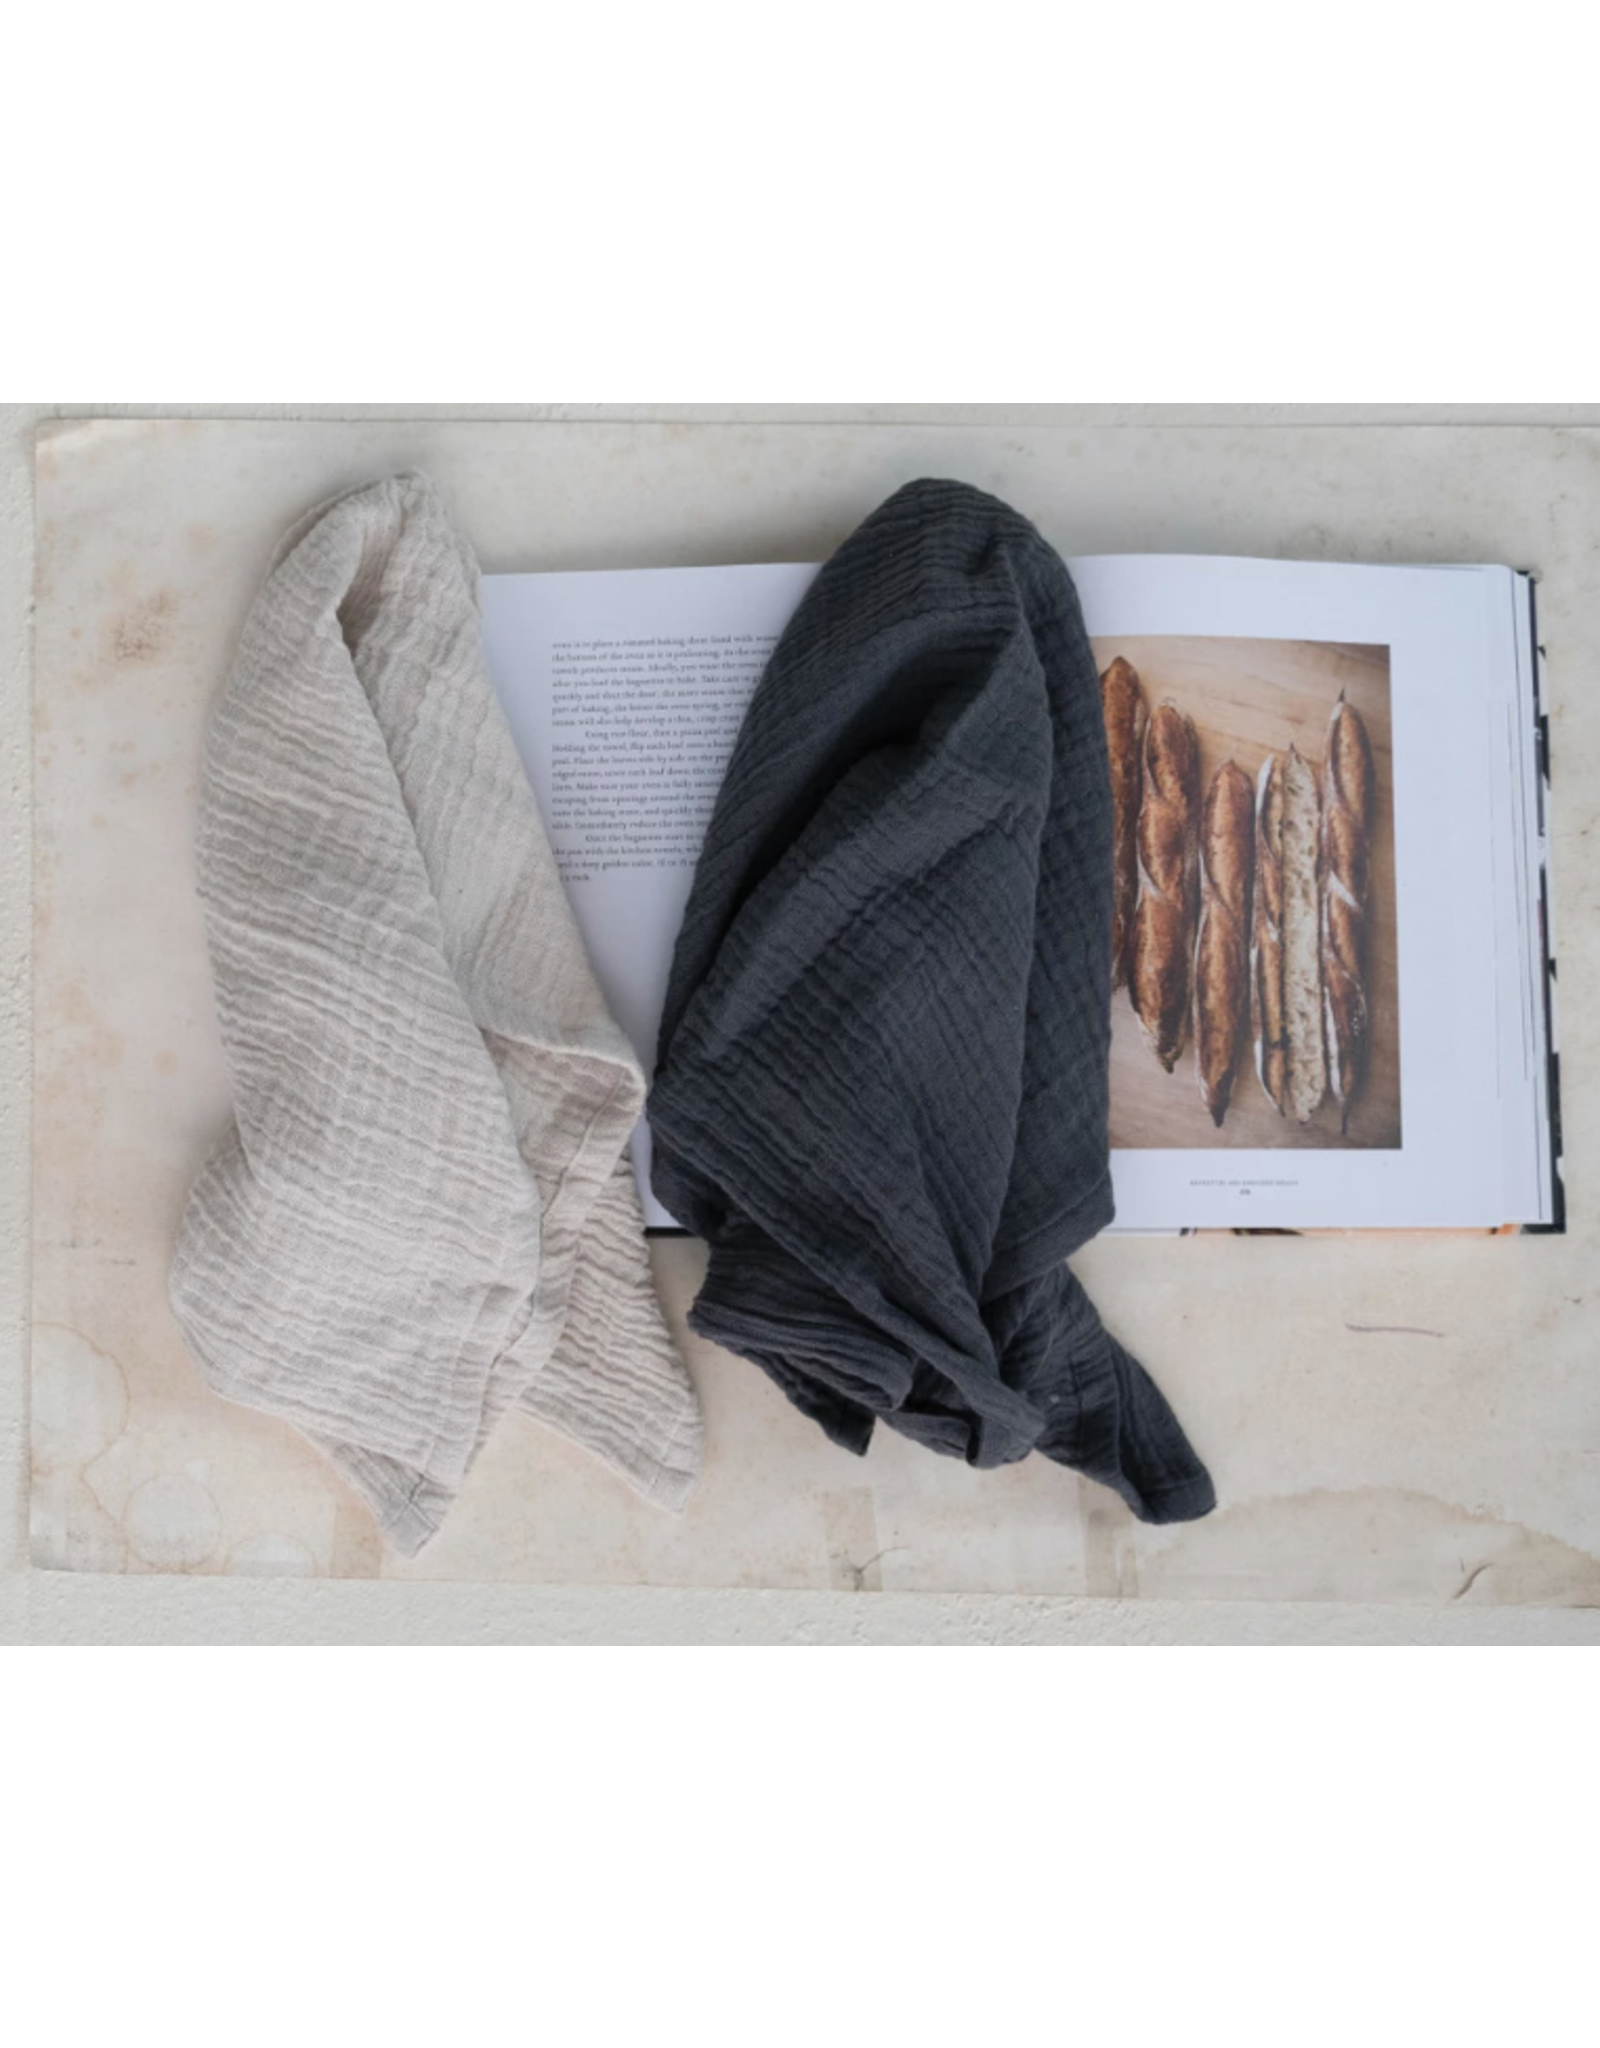 Creative Co-Op Cotton Double Cloth Tea Towel, set of 2